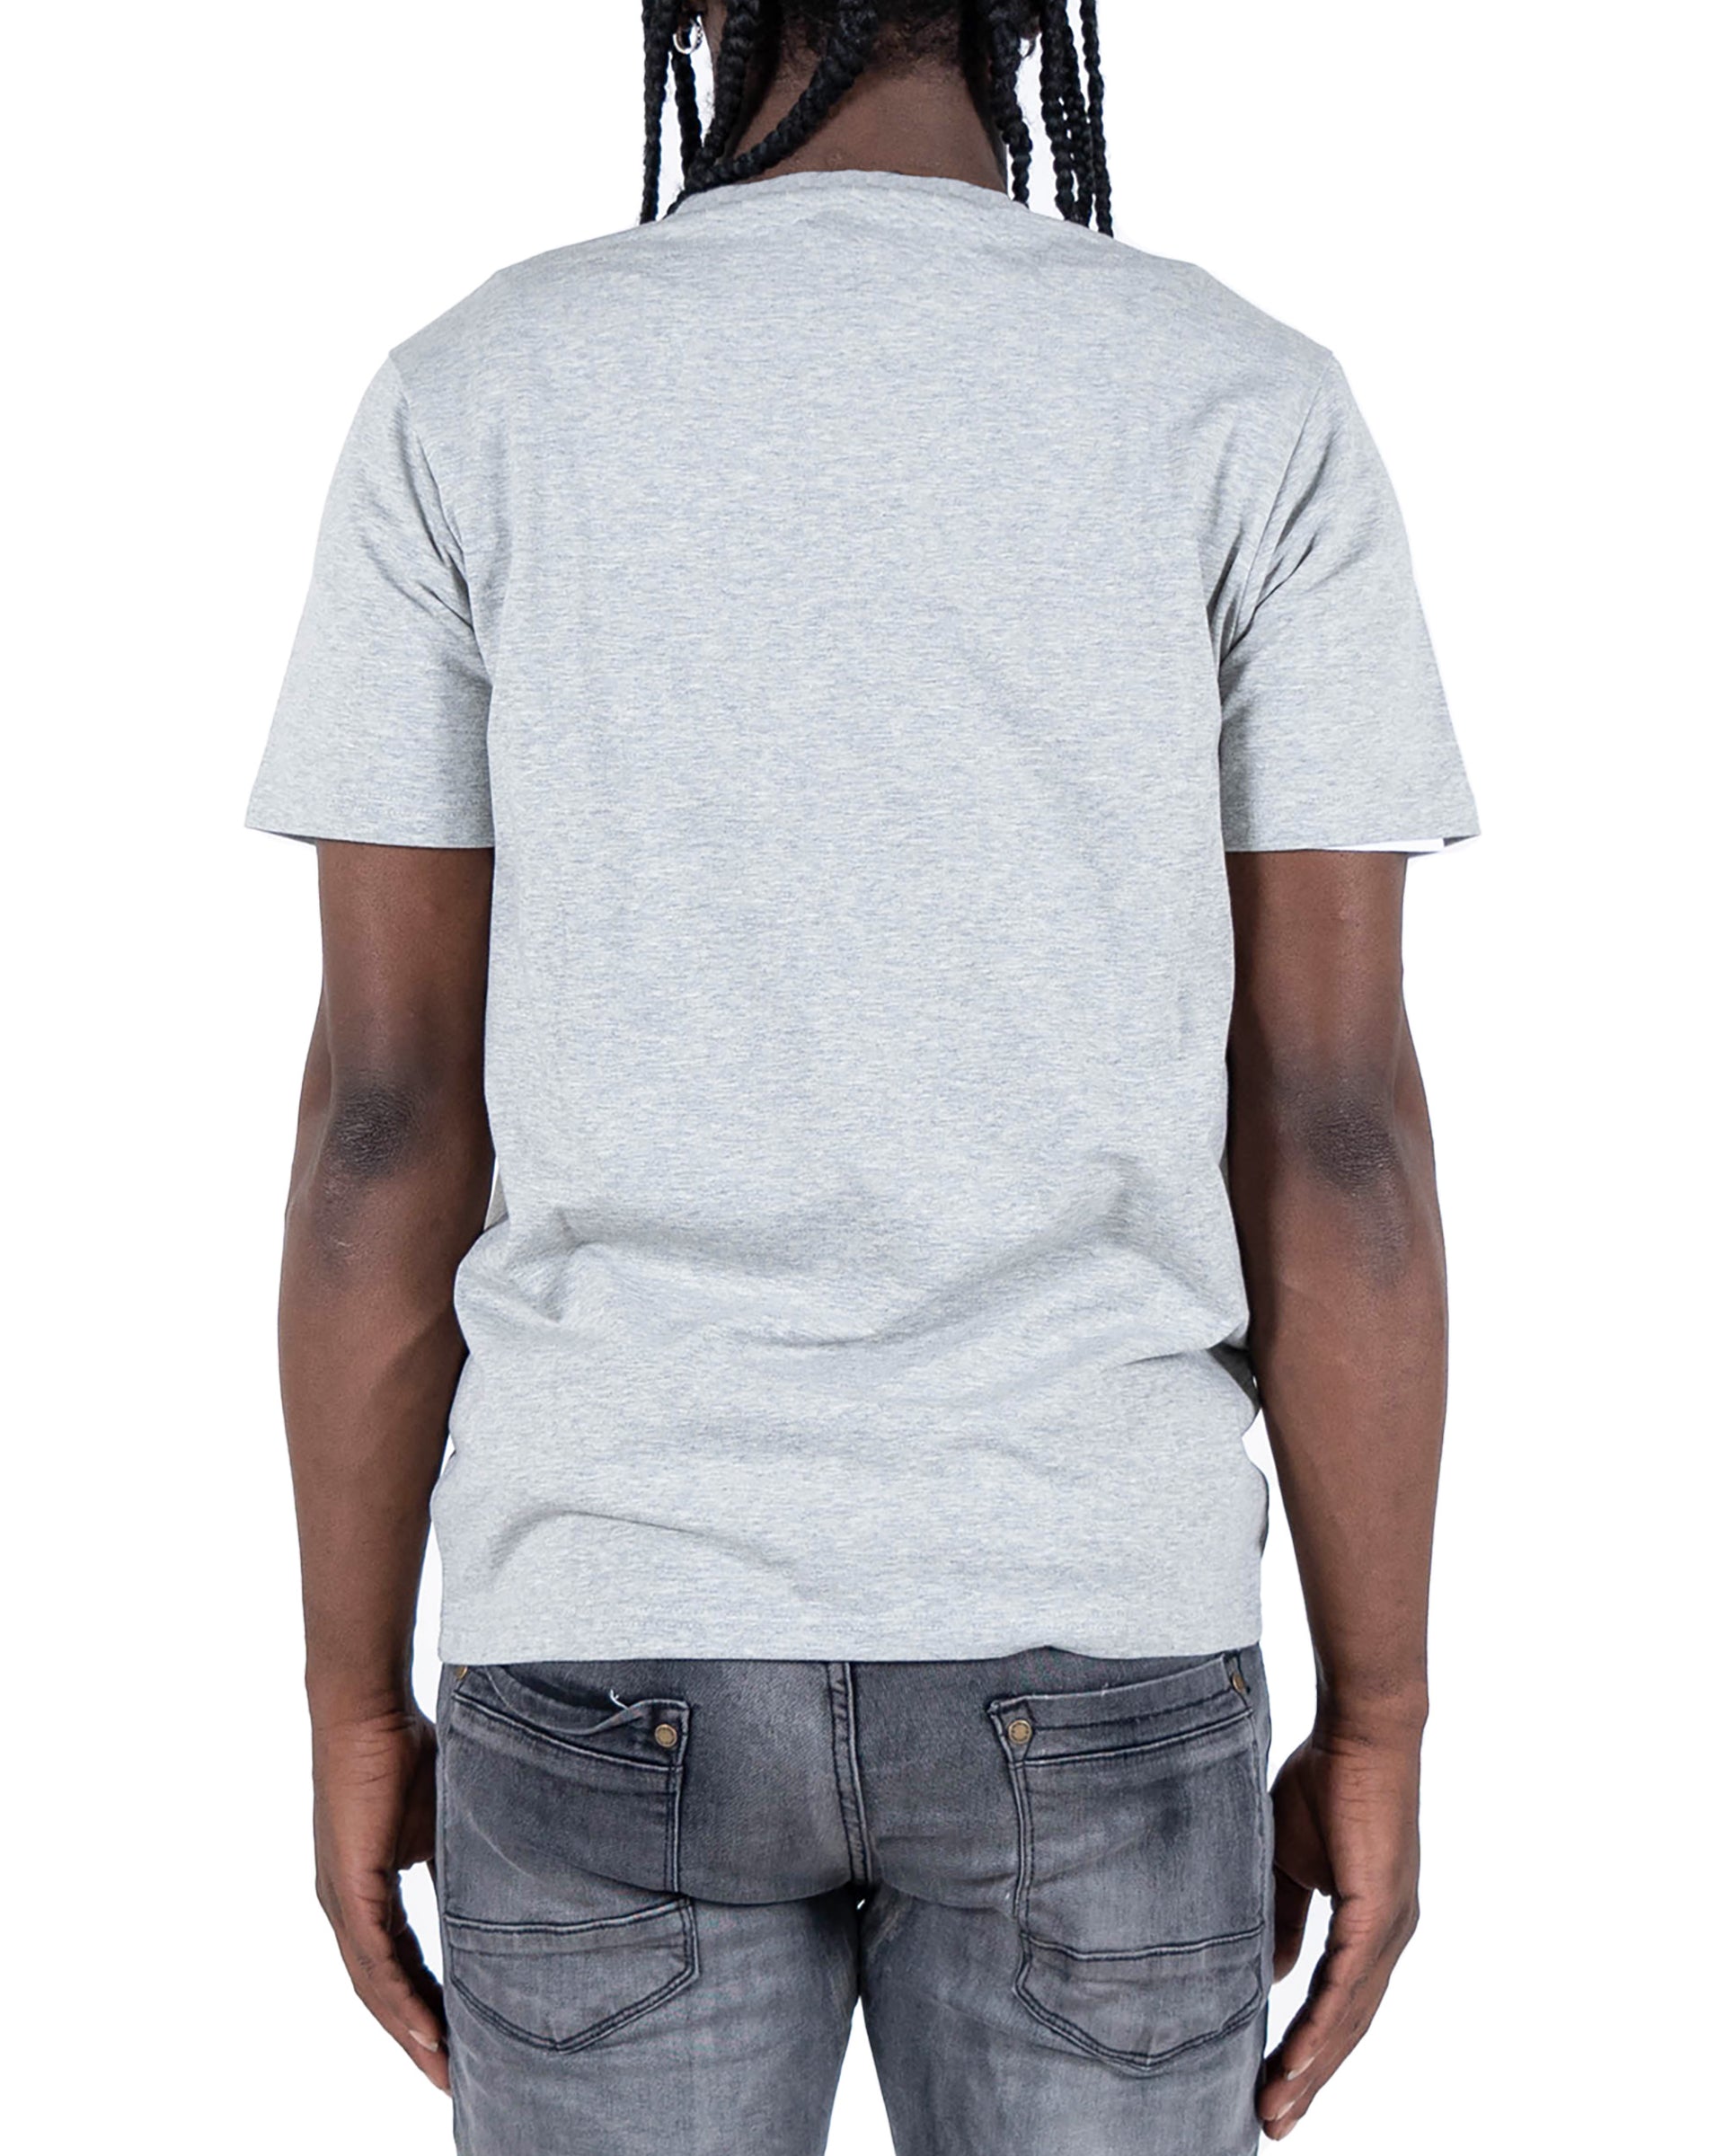 Men's "Ruthless" Graphic T-Shirt | Grey